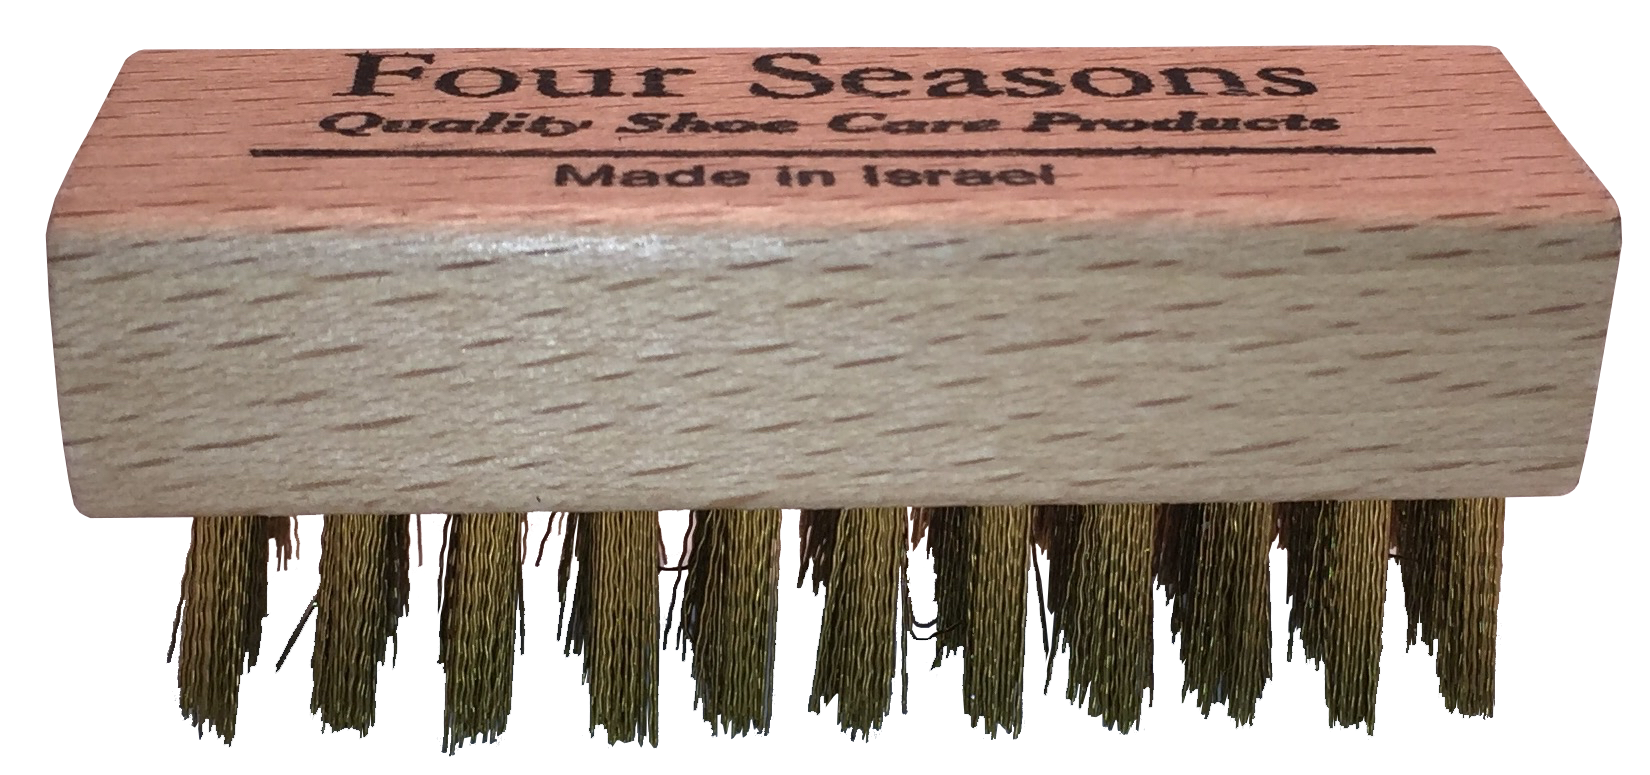 Four Seasons Brass Suede Brush